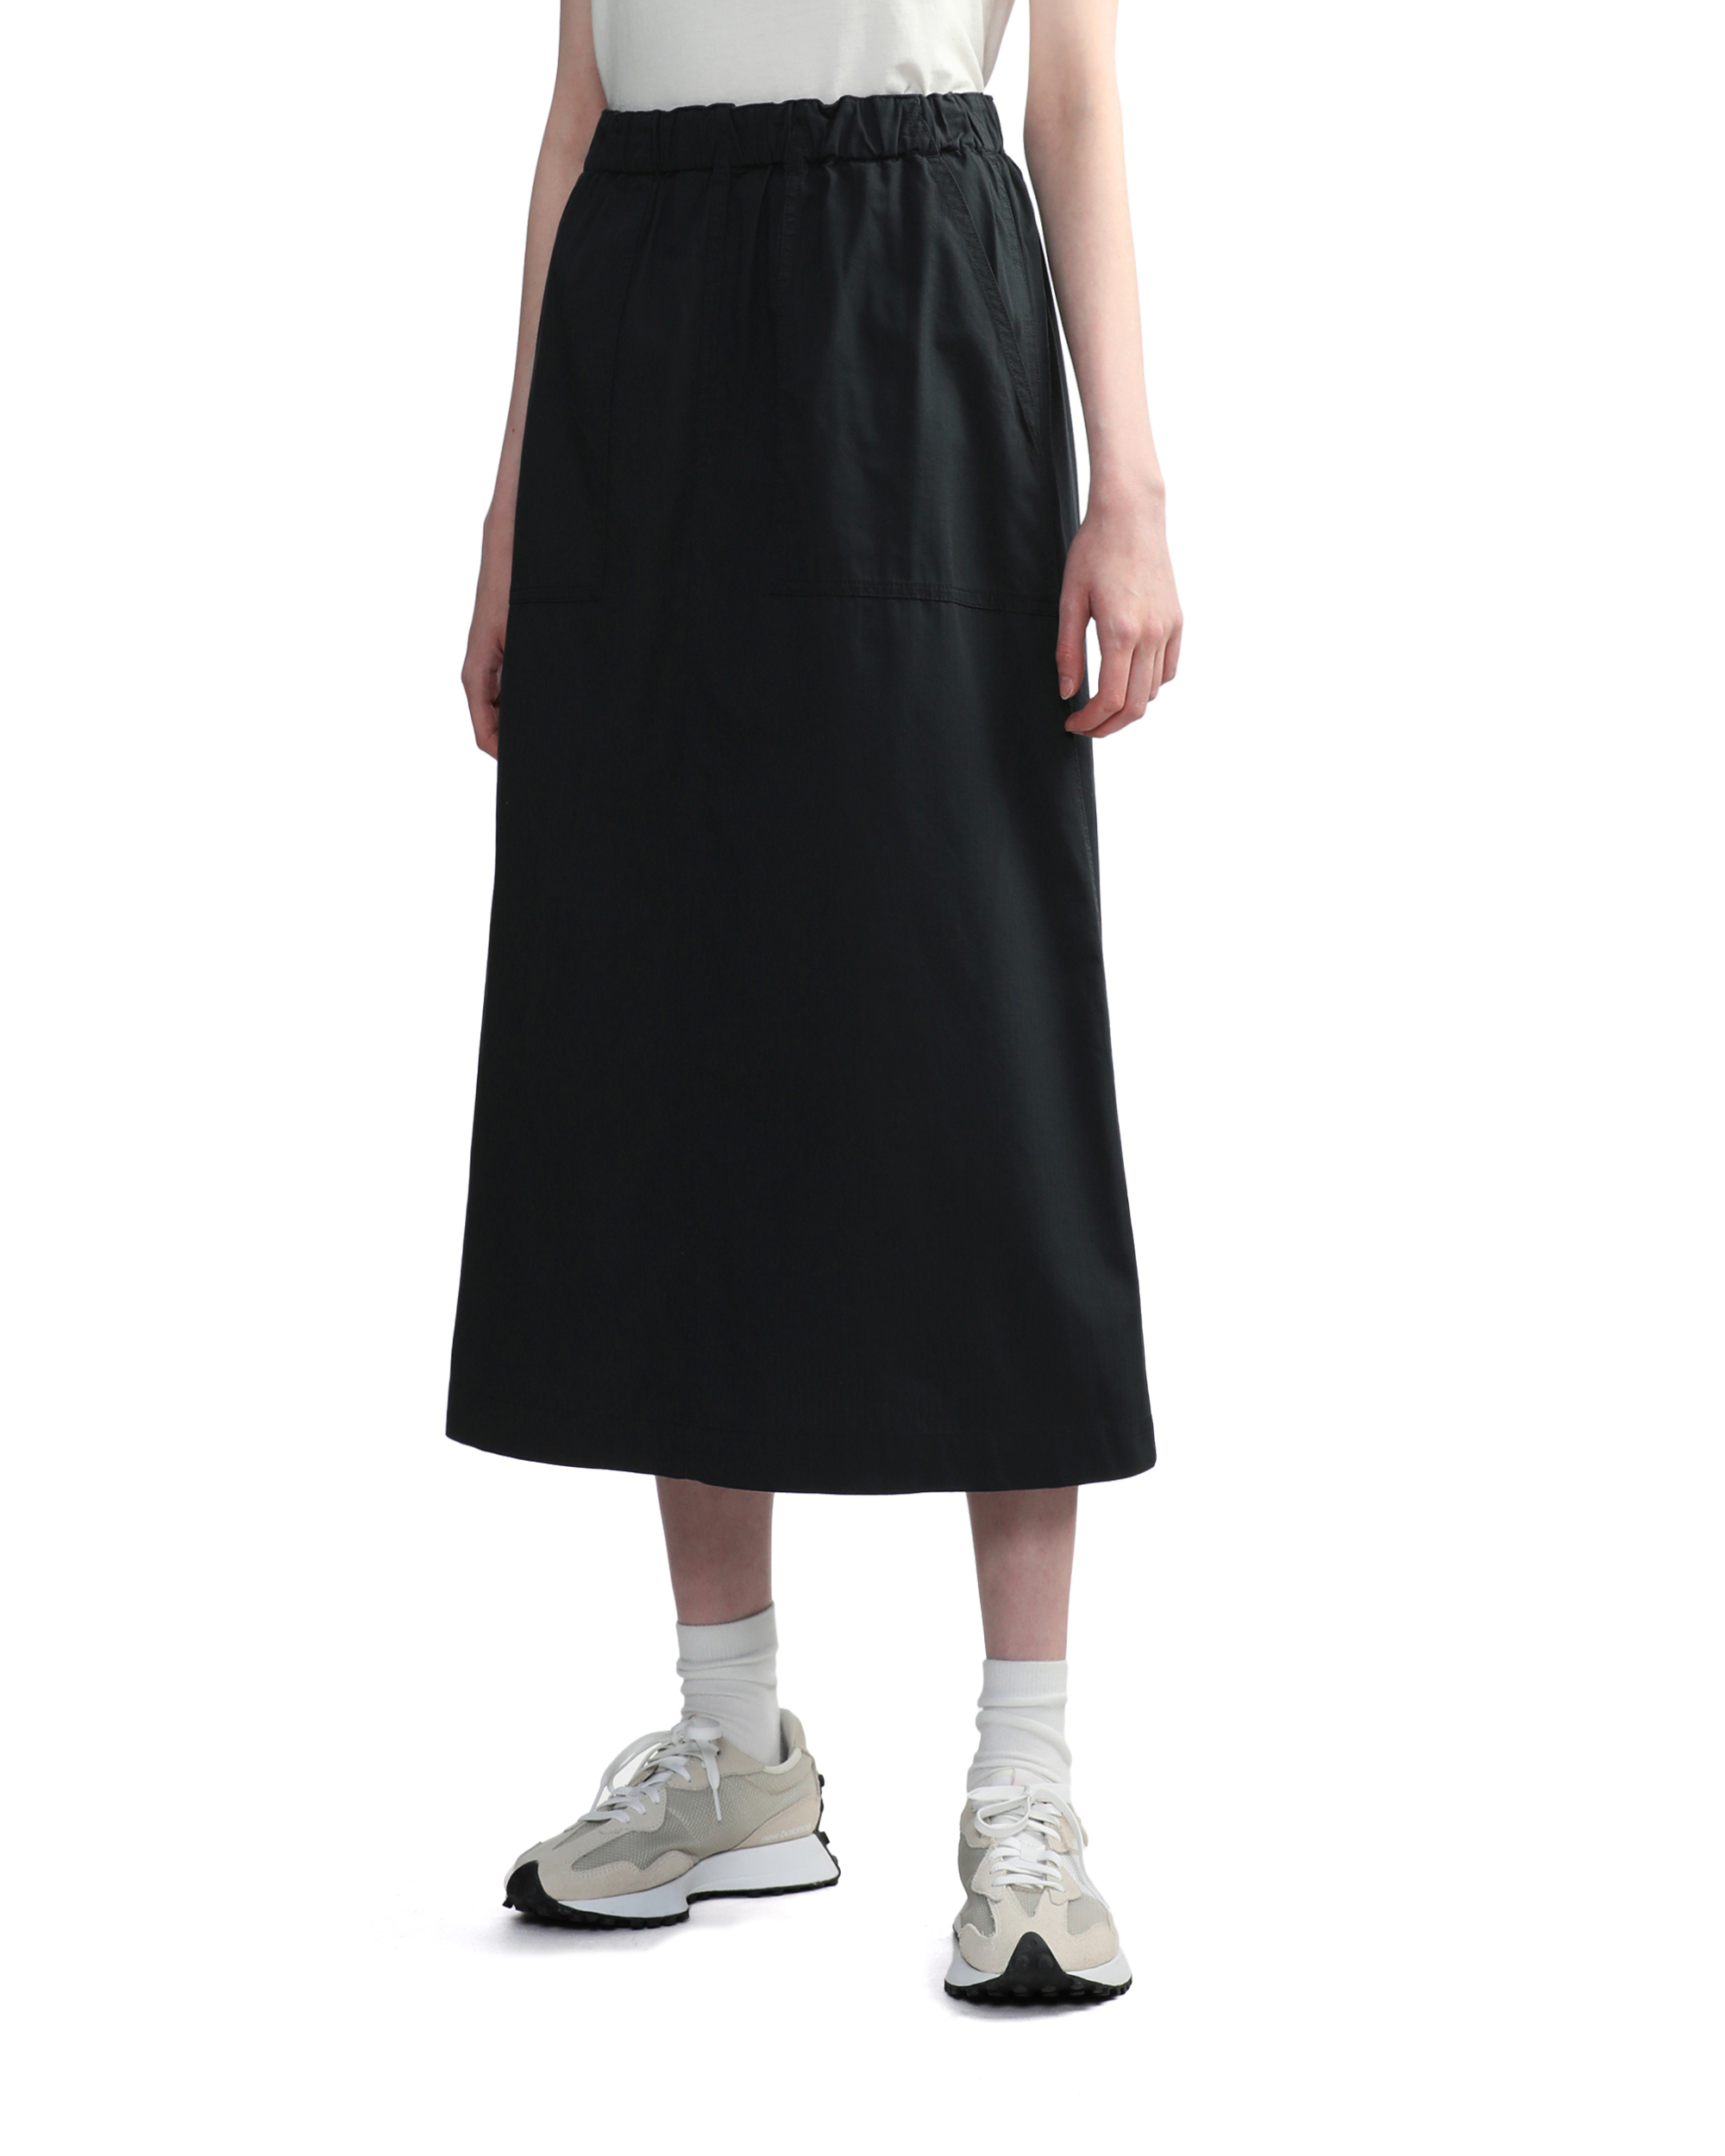 SNOW PEAK Takibi light ripstop skirt | ITeSHOP